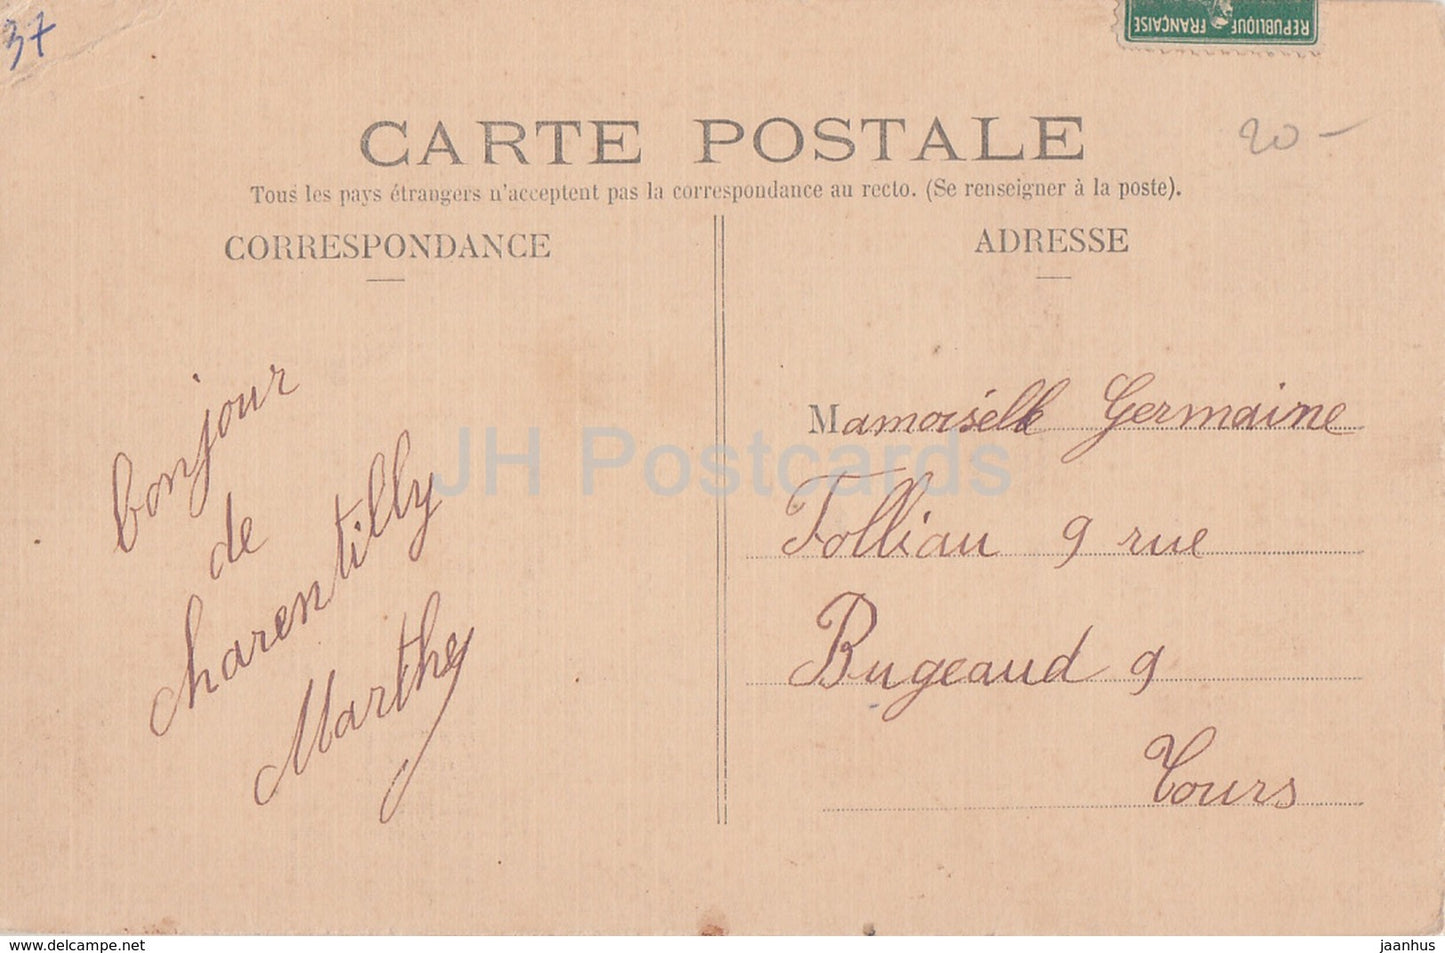 Charentilly - Chateau des Ligneries - castle - 5 - old postcard - France - used